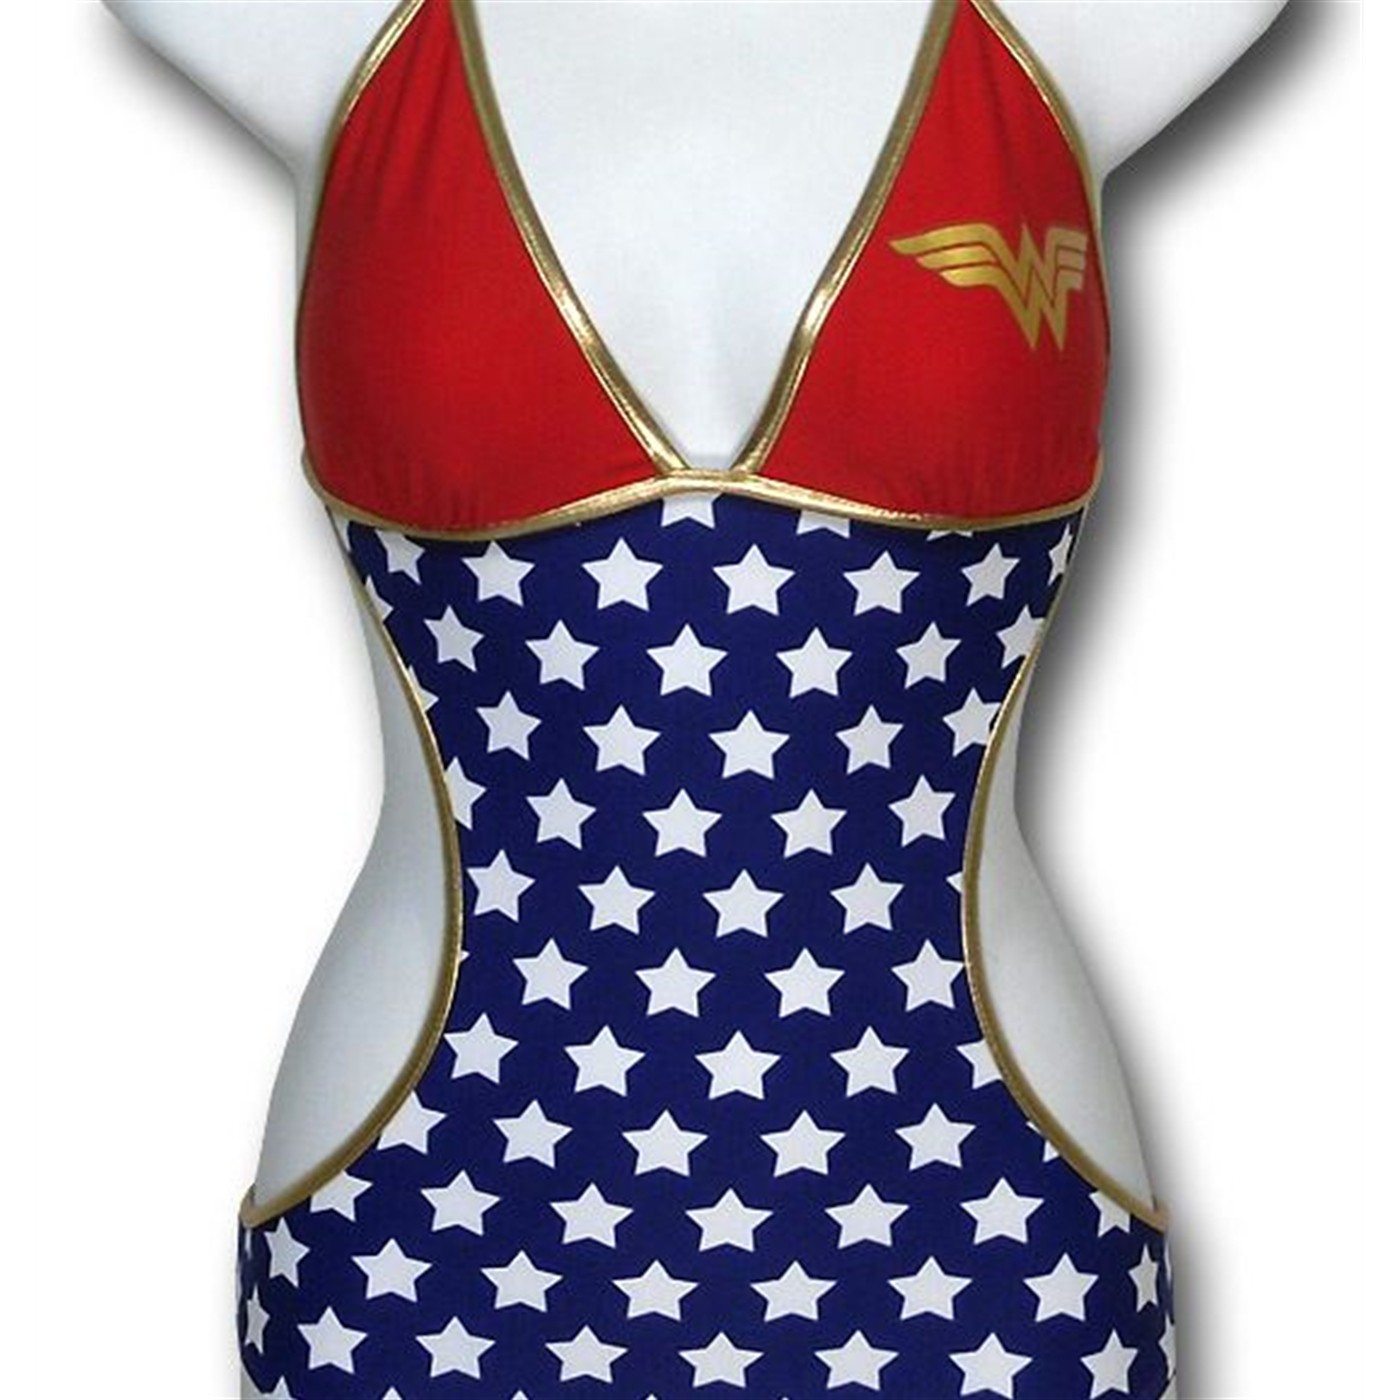 Wonder Woman Triangle Monokini Women's Swimsuit